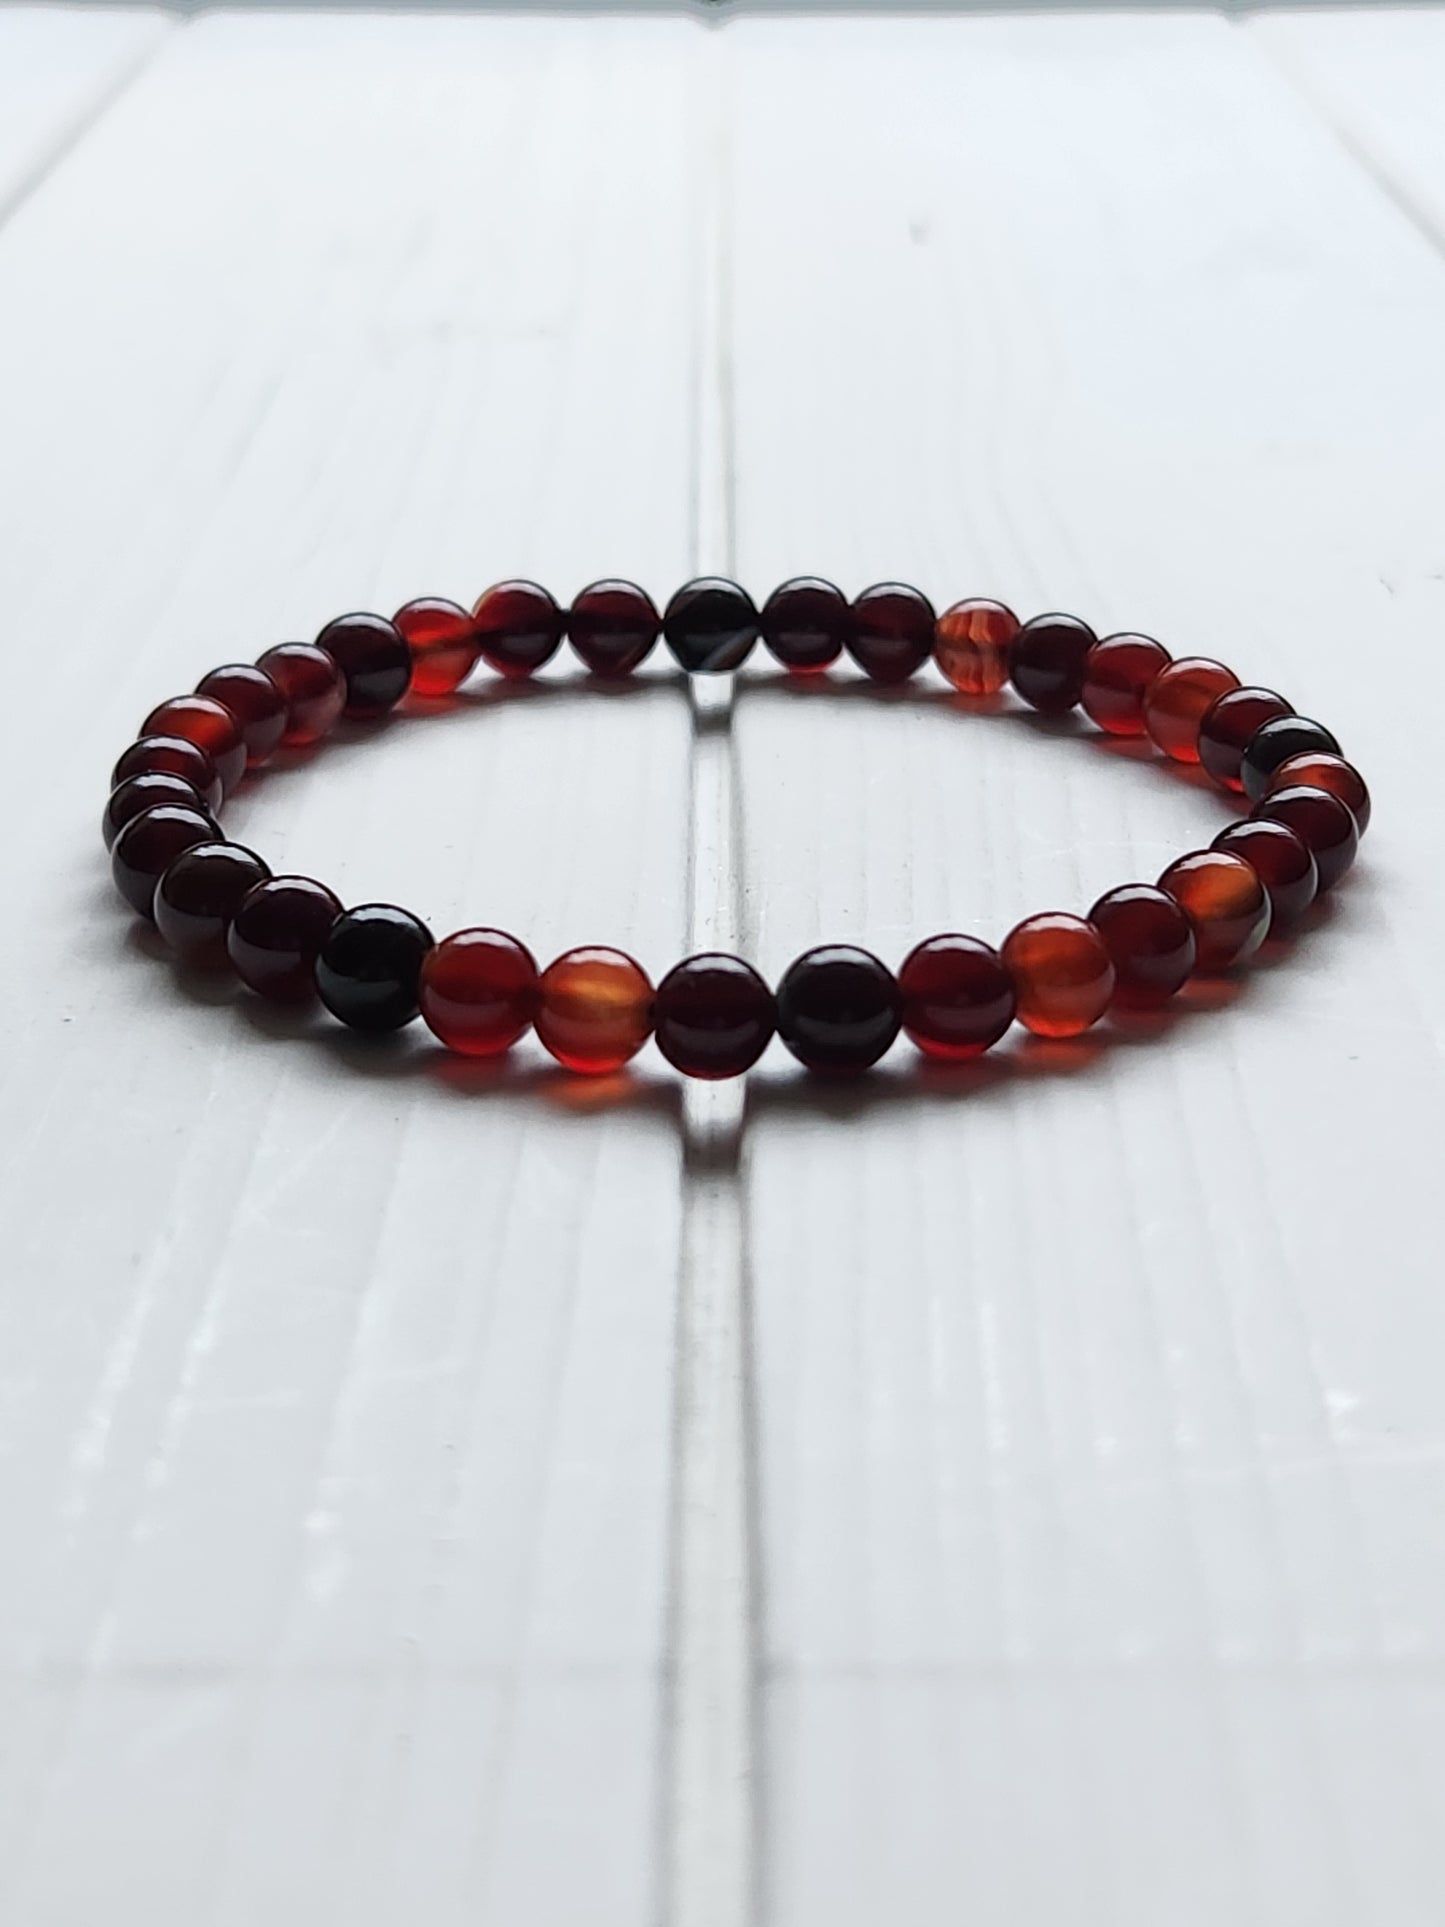 Wine Red Agate Stone Bracelet - 6mm stones - vitality - growth - calming - spiritual